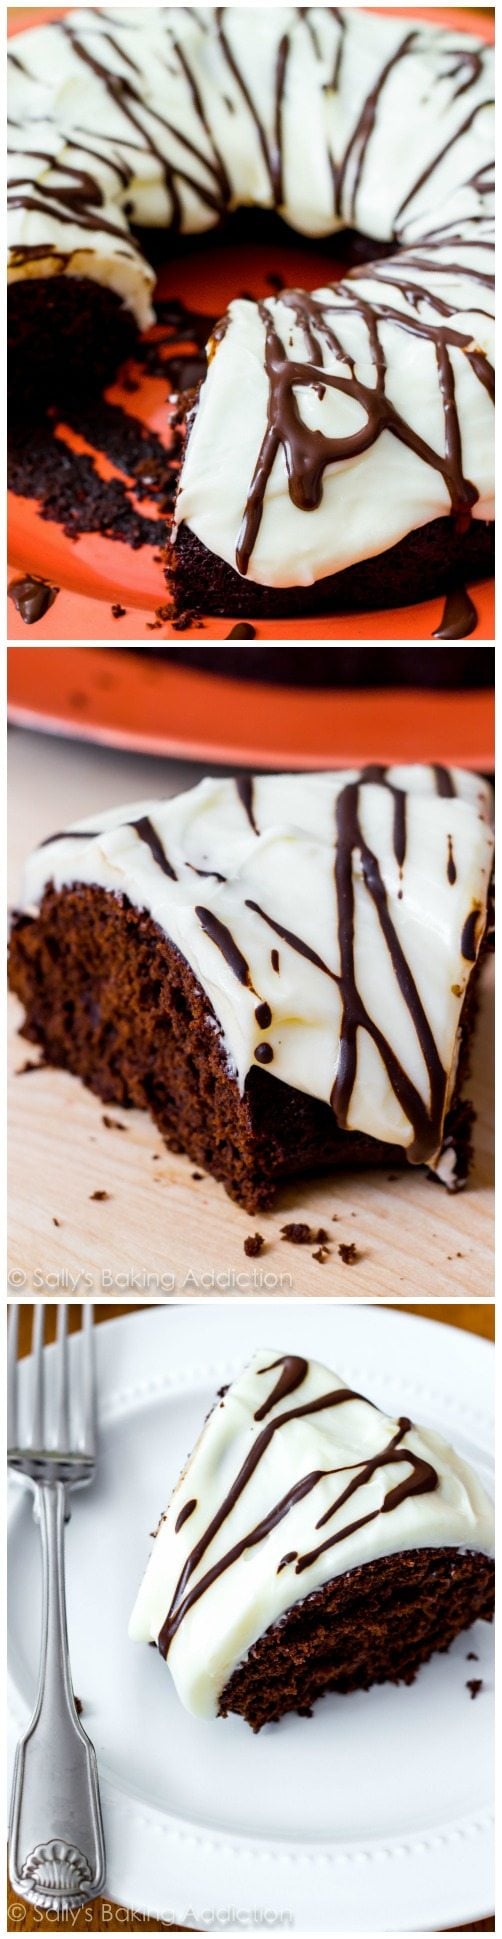 3 images of chocolate gingerbread bundt cake